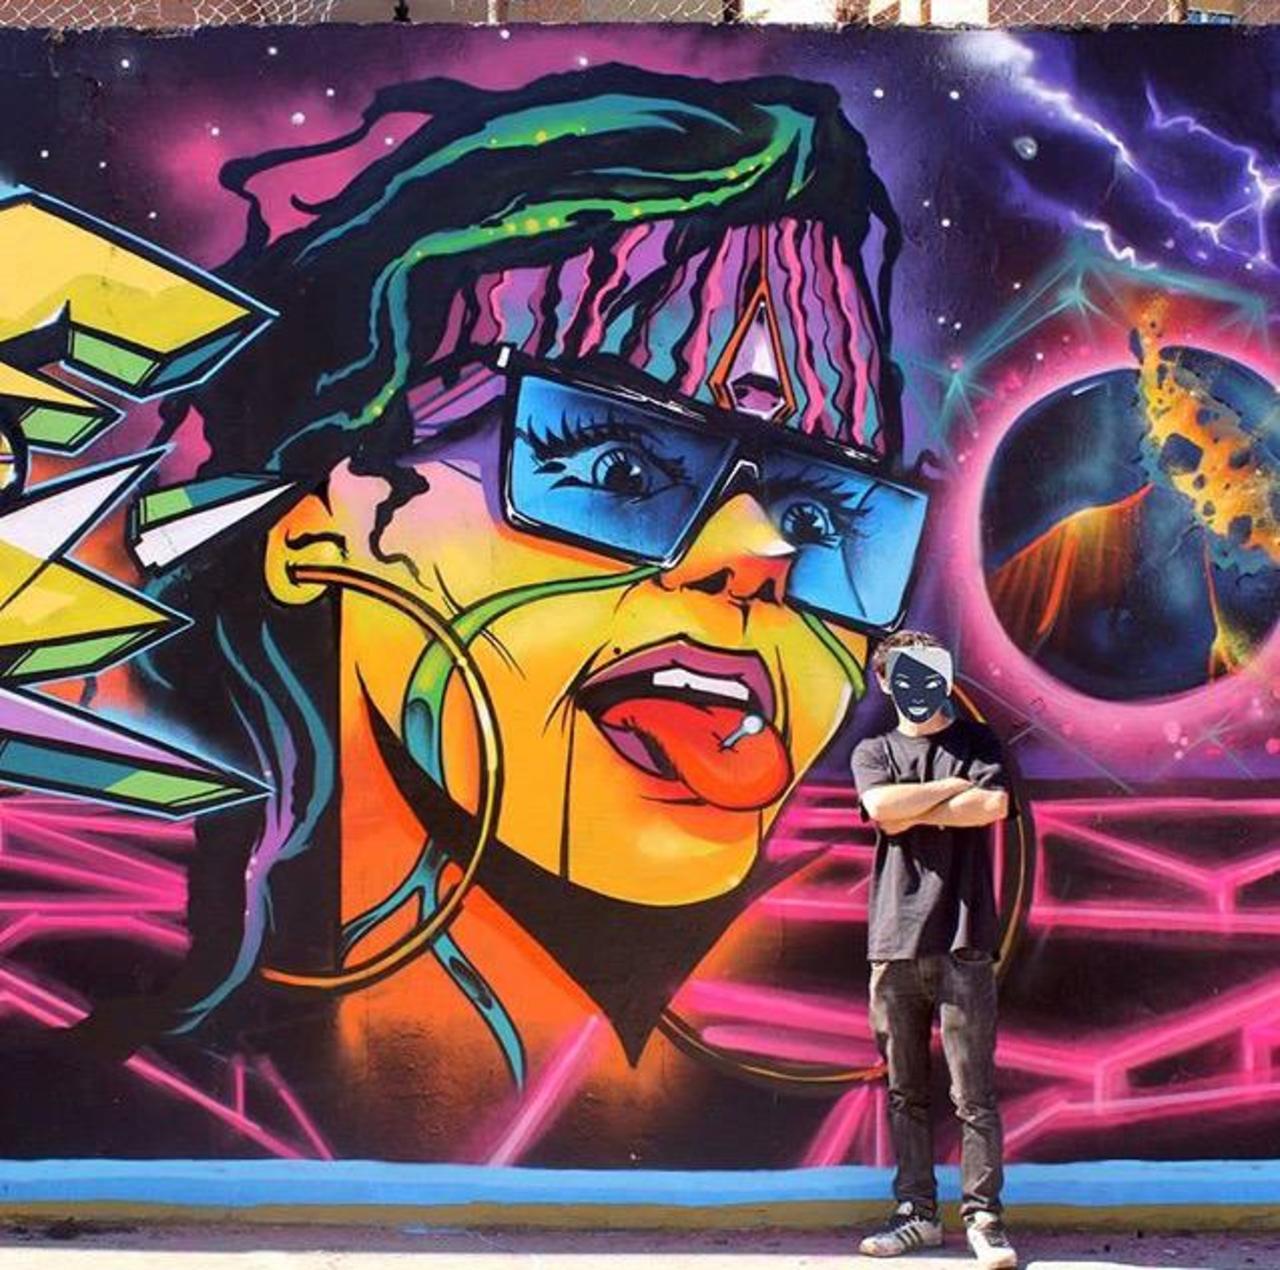 Brilliant new Street Art by the artist Jaycaes

#art #graffiti #mural #streetart http://t.co/o2cetEFONr